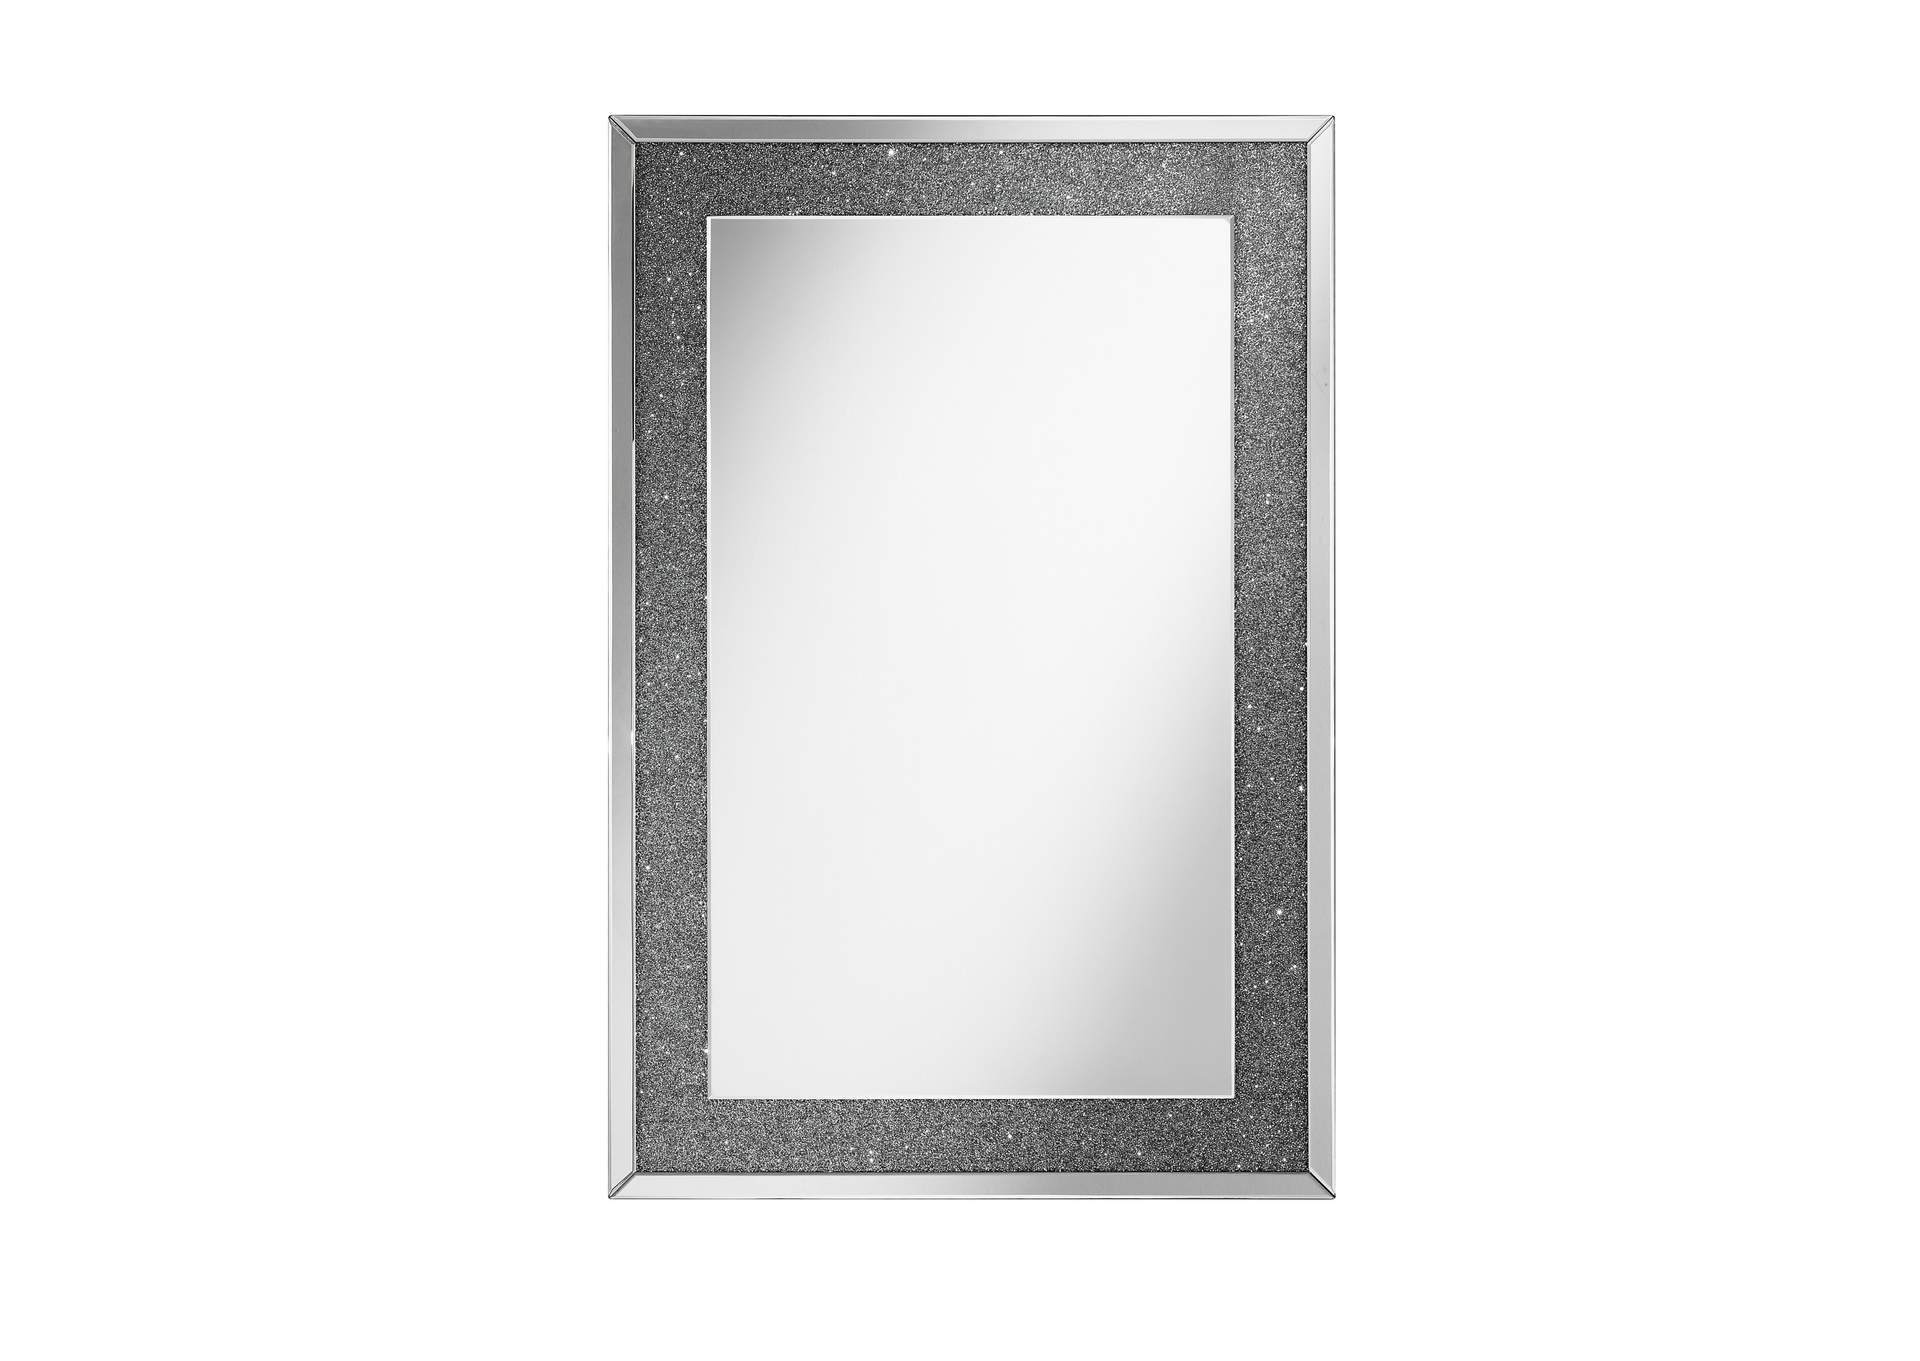 Glam Wall Mirror